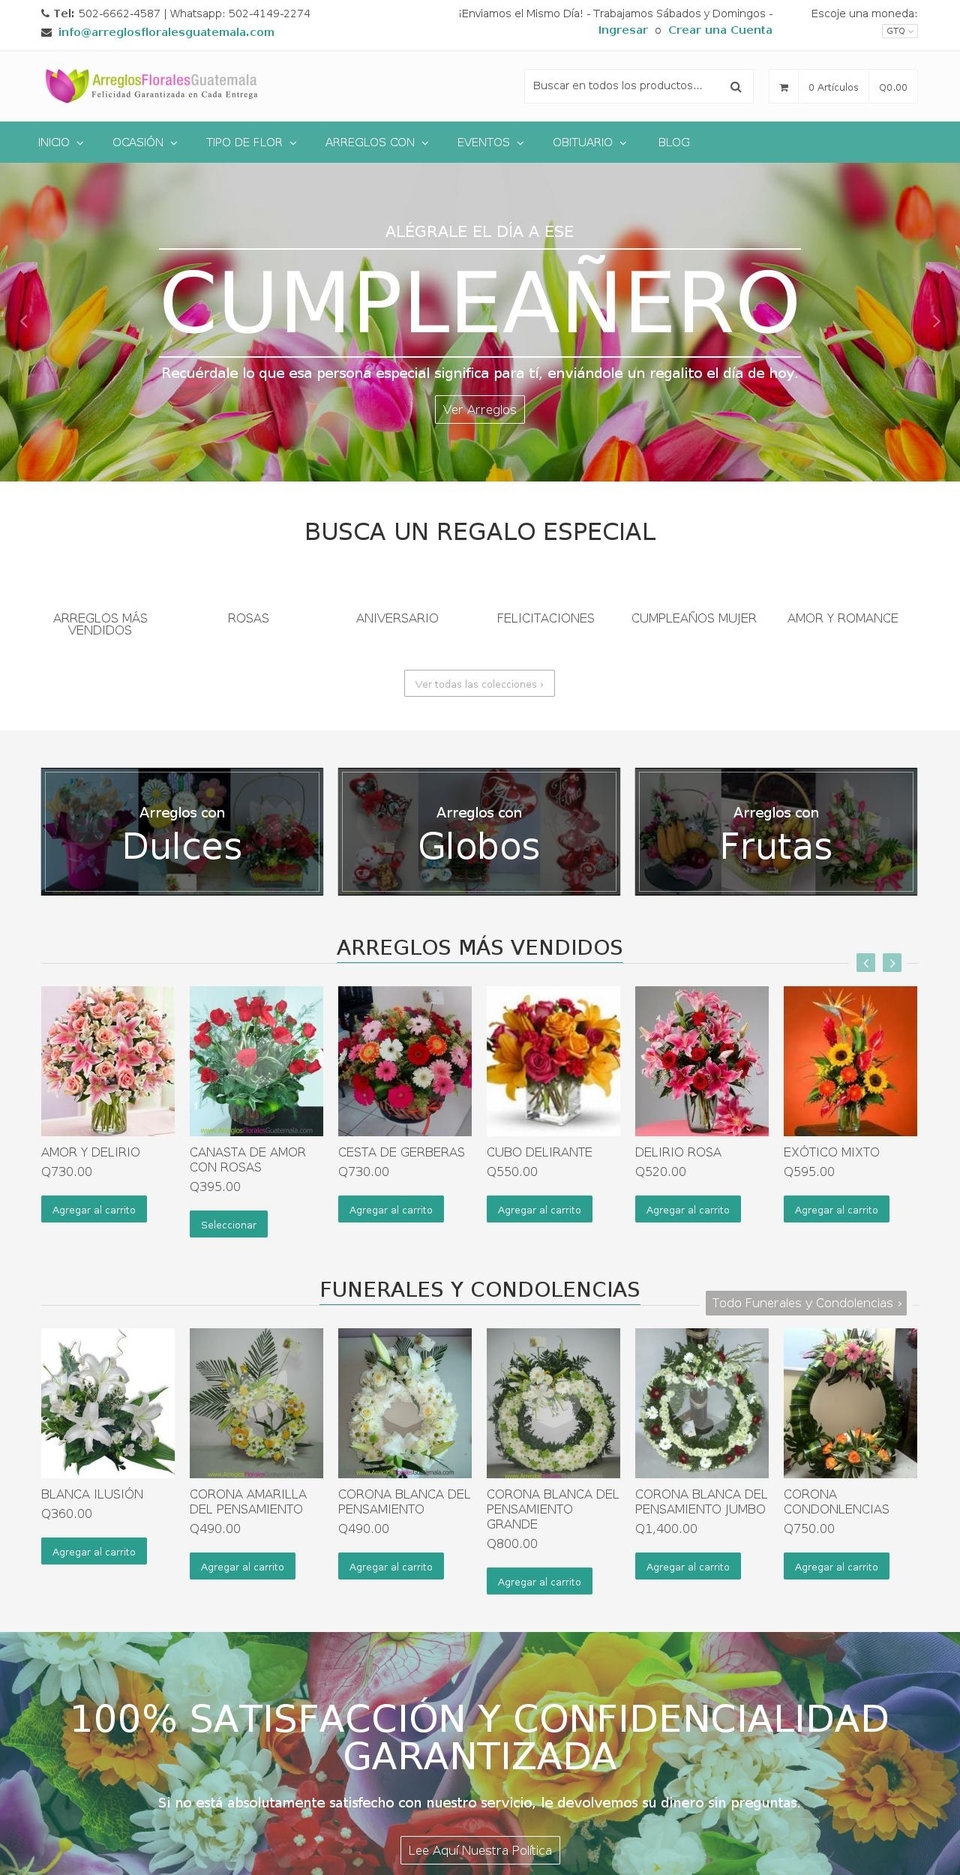 arreglosfloralesguatemala.com shopify website screenshot